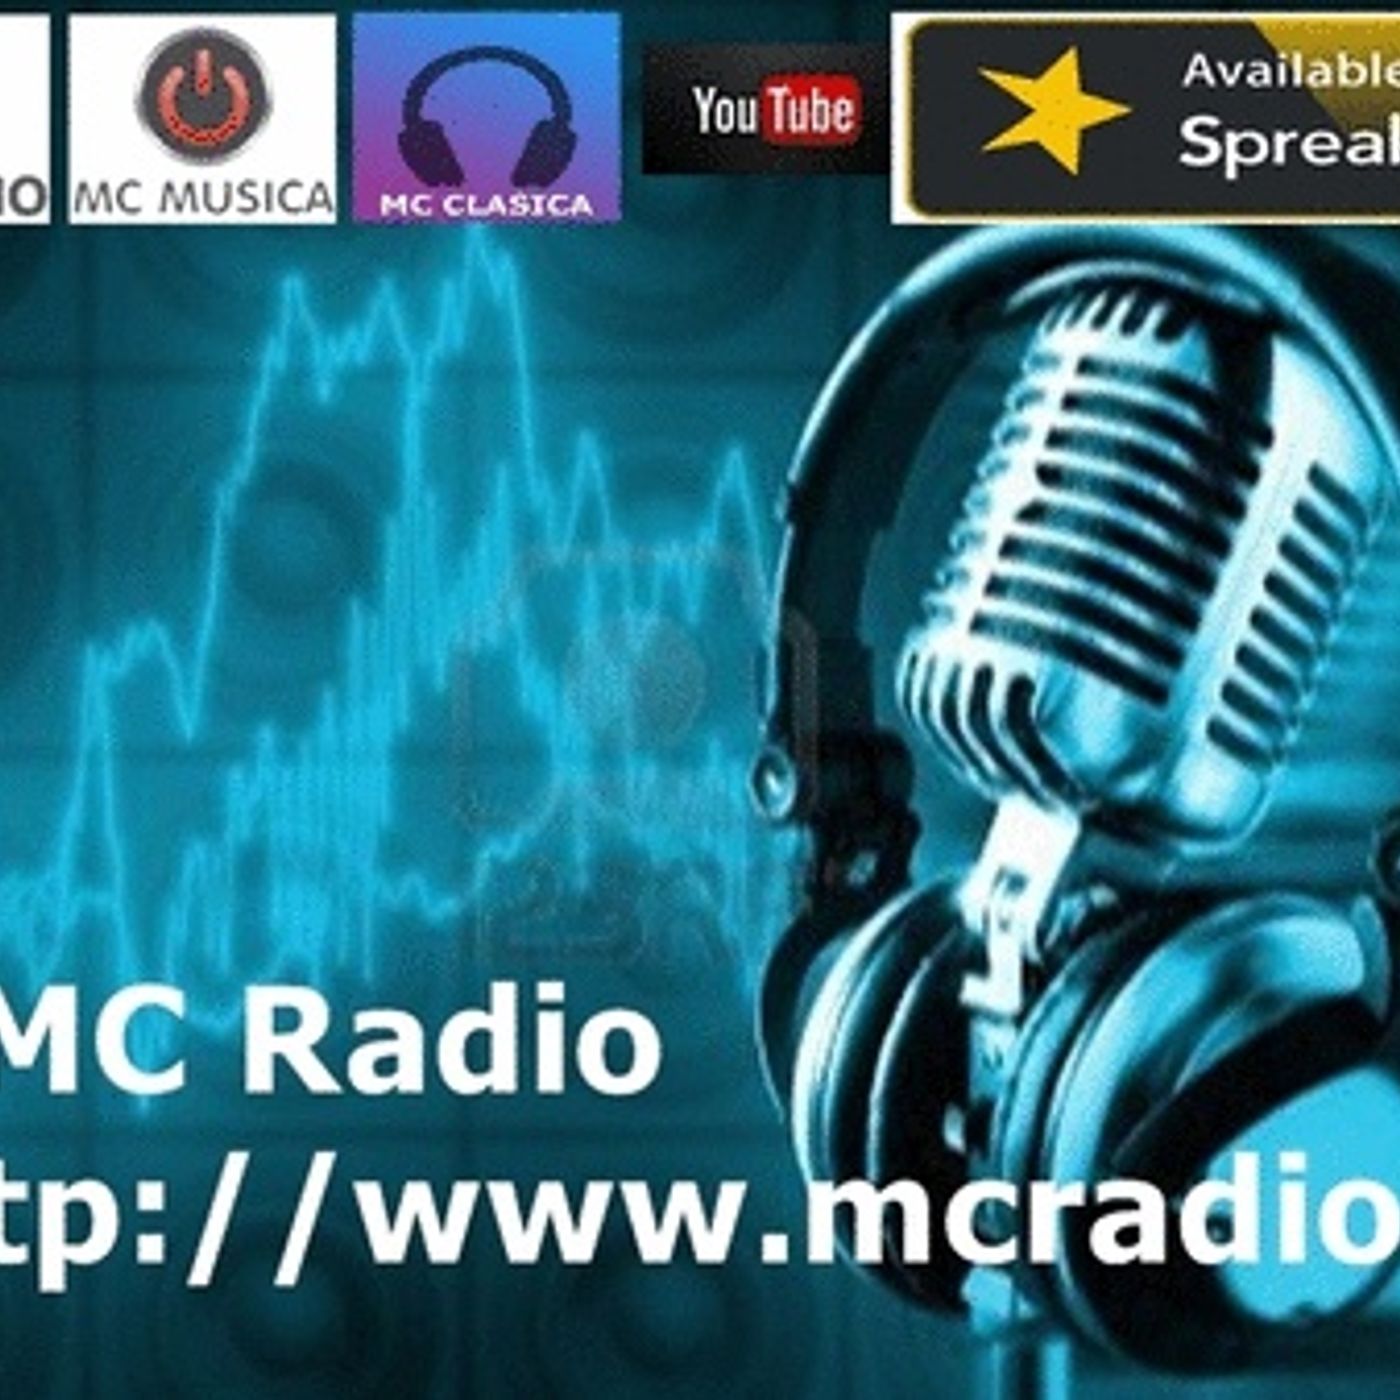 MC RADIO-MC MUSICA-MUSIC IS IN THE AIR